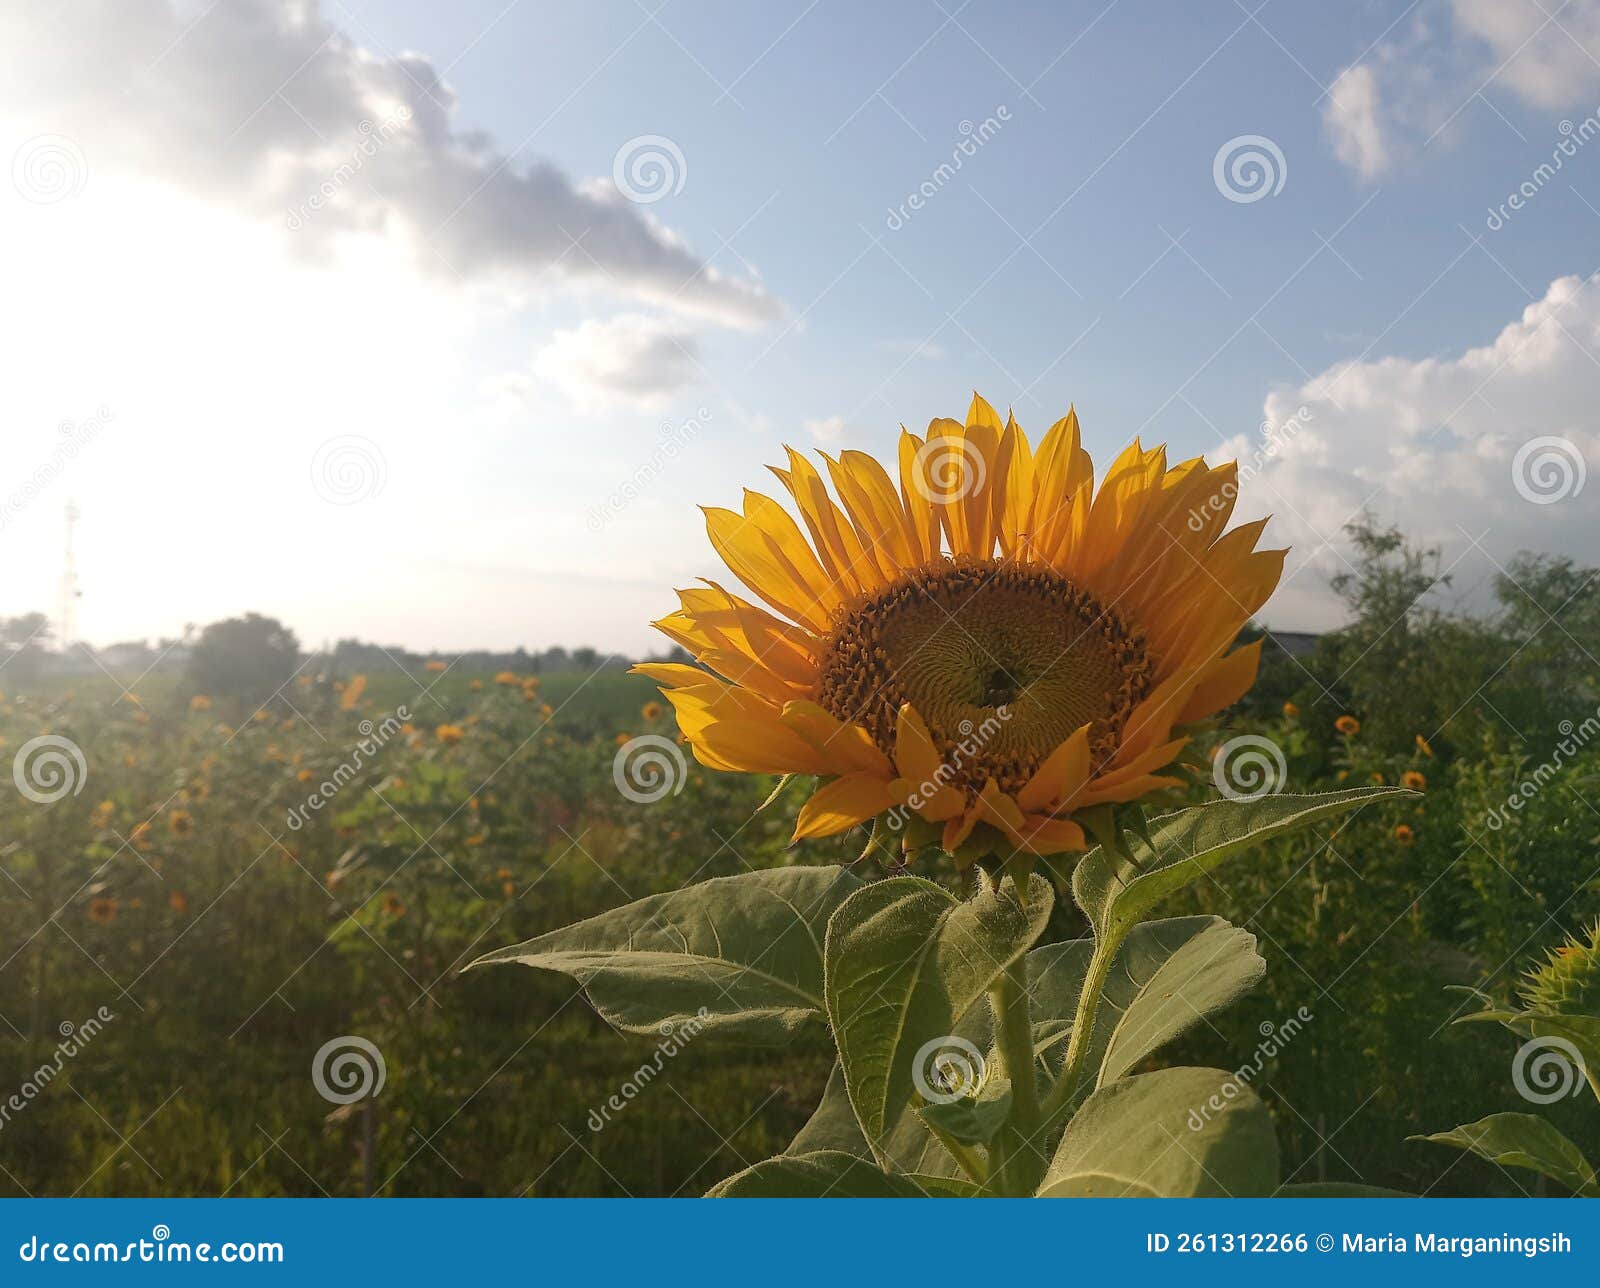 sunflower garde at sunset.